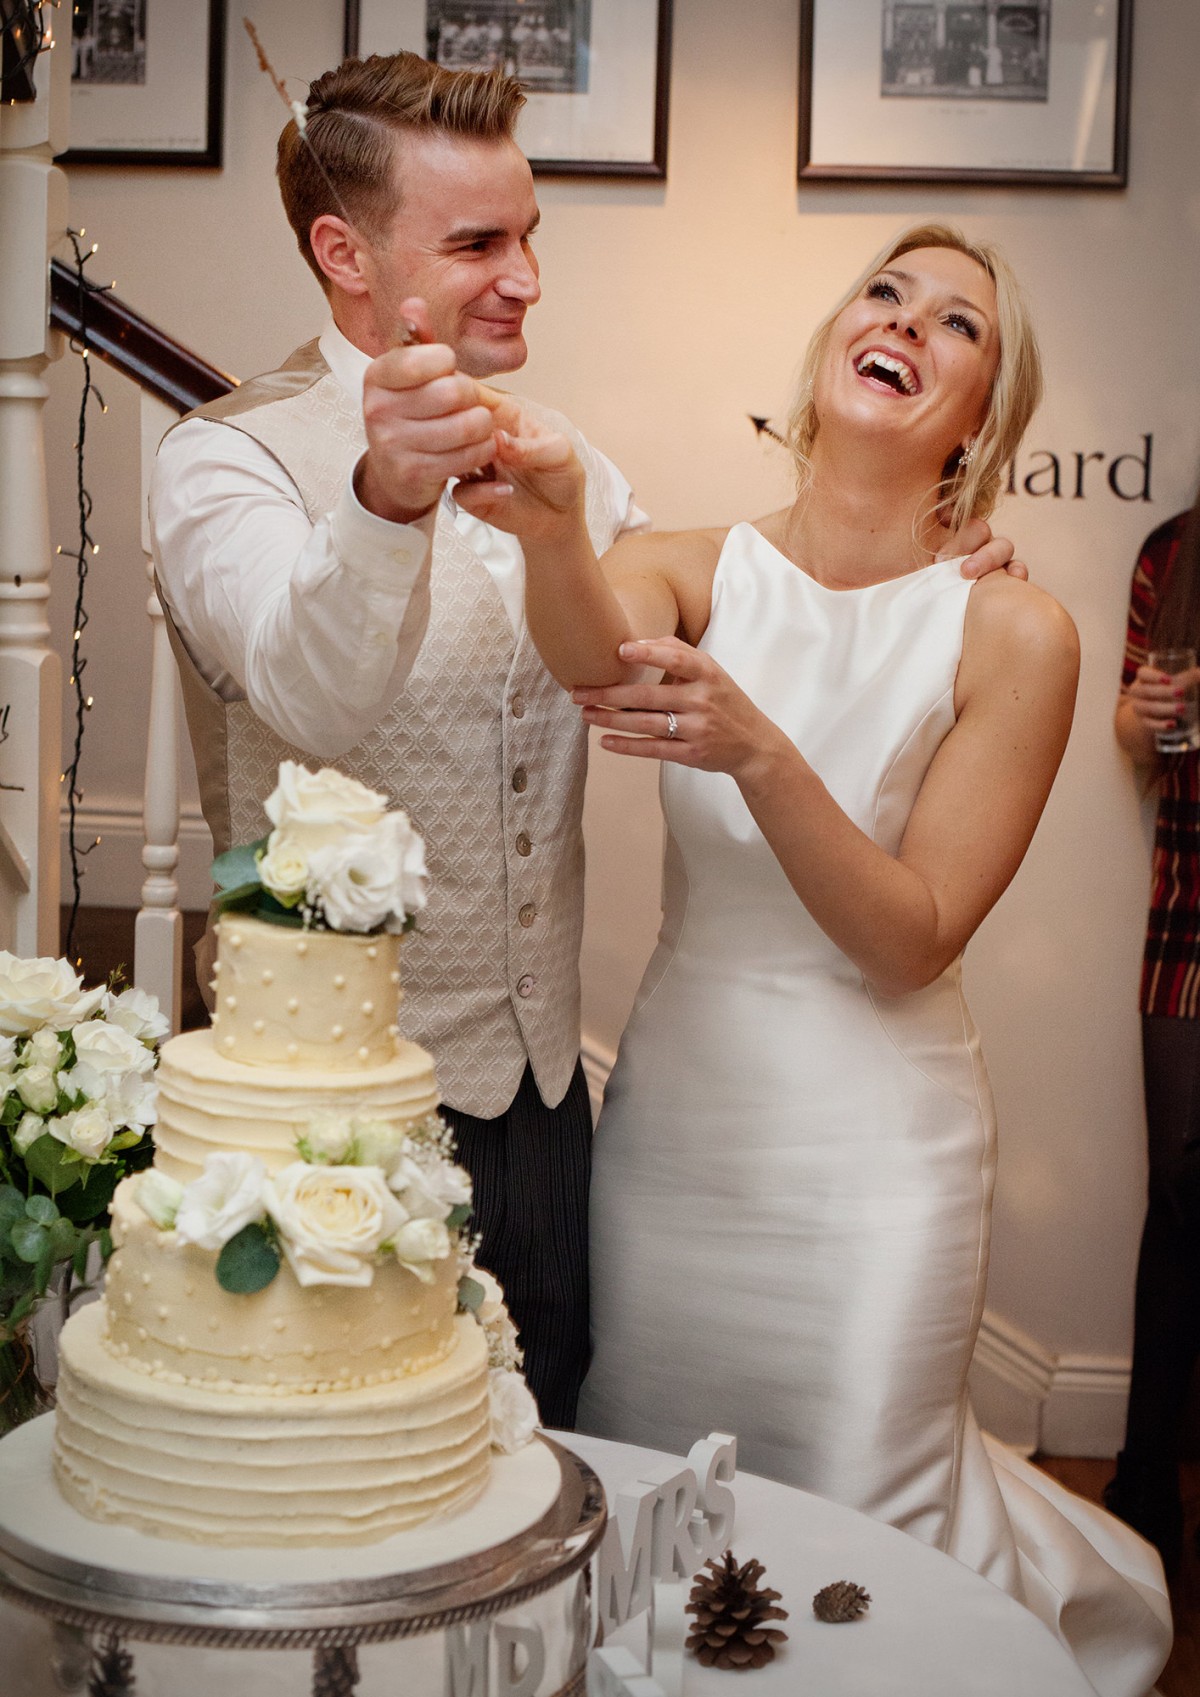 every wedding has cake cutting